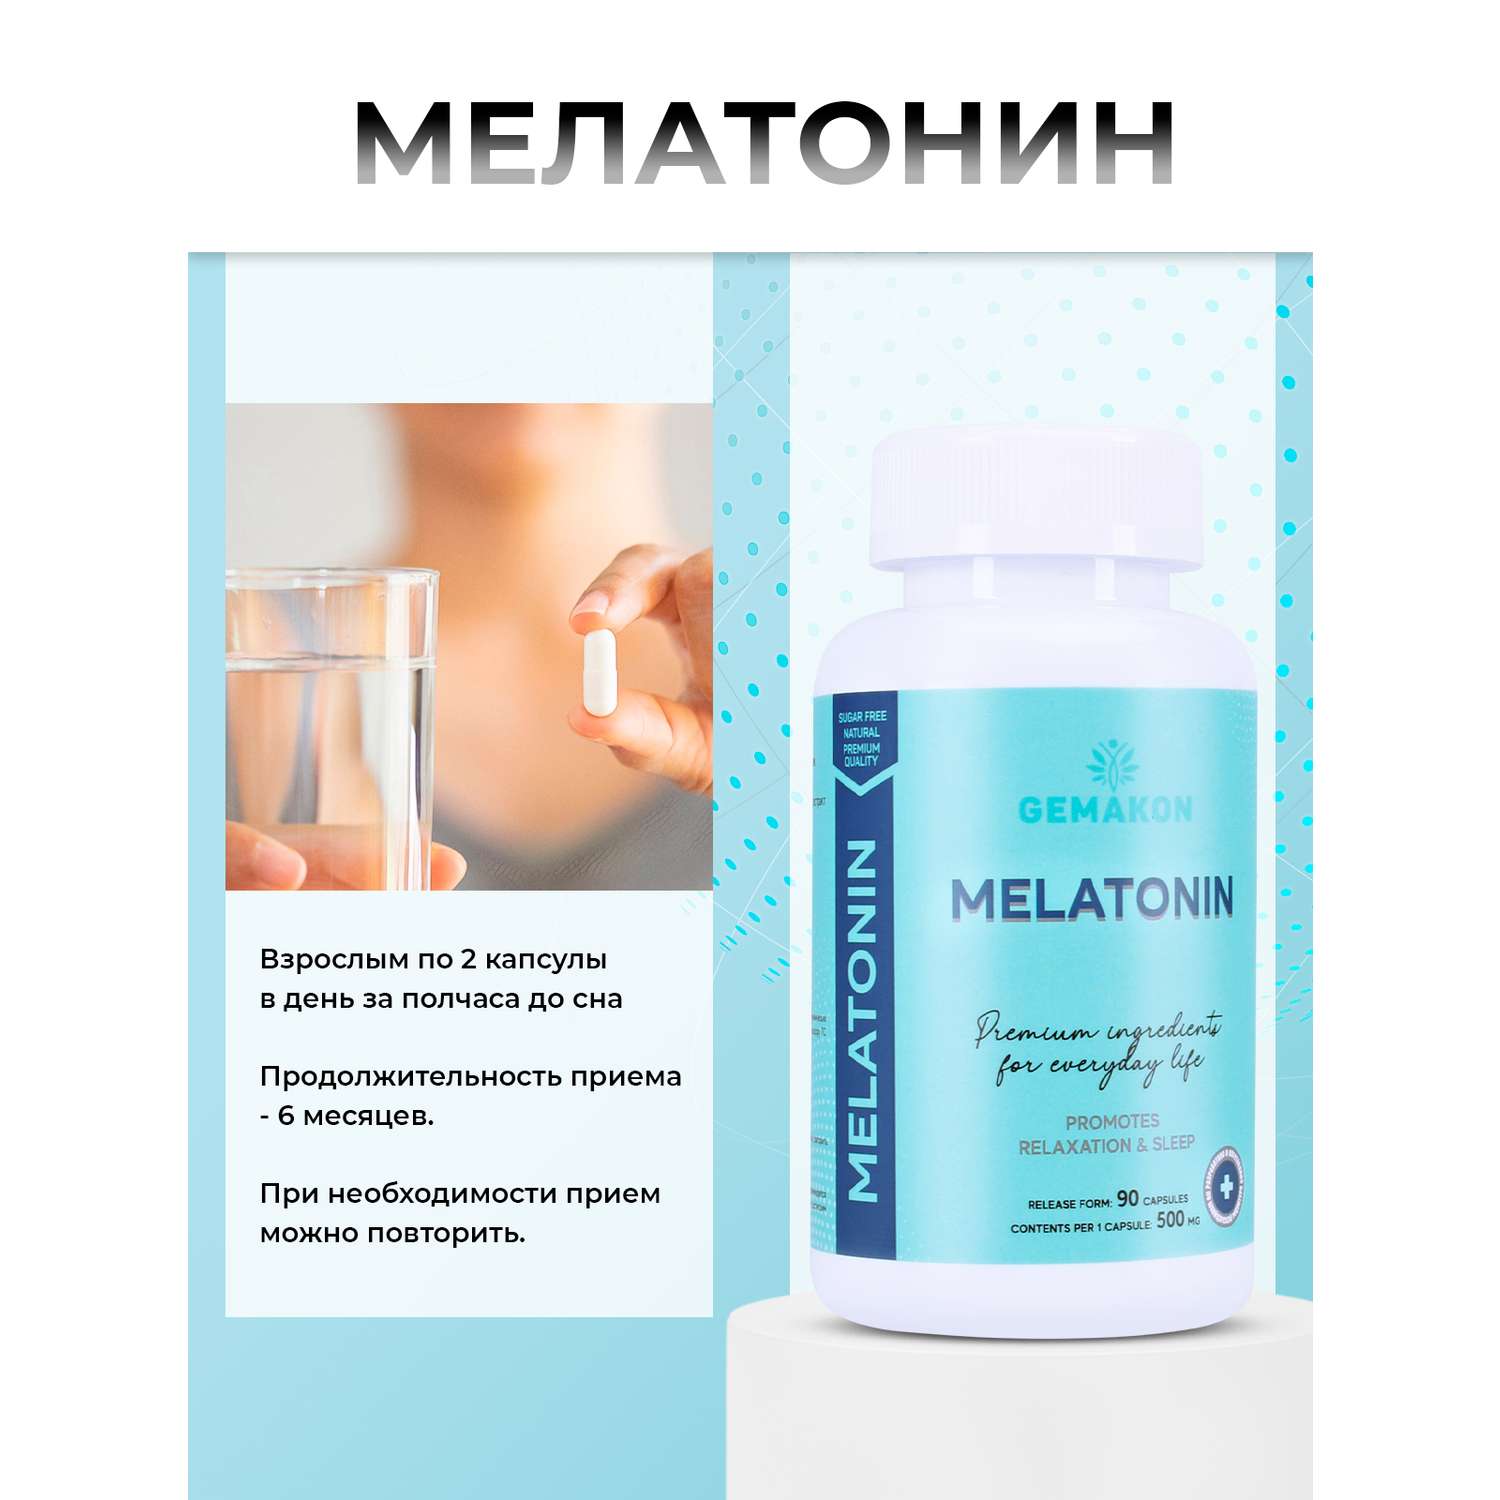 Мелатонин Гемакон для спокойного сна - фото 6